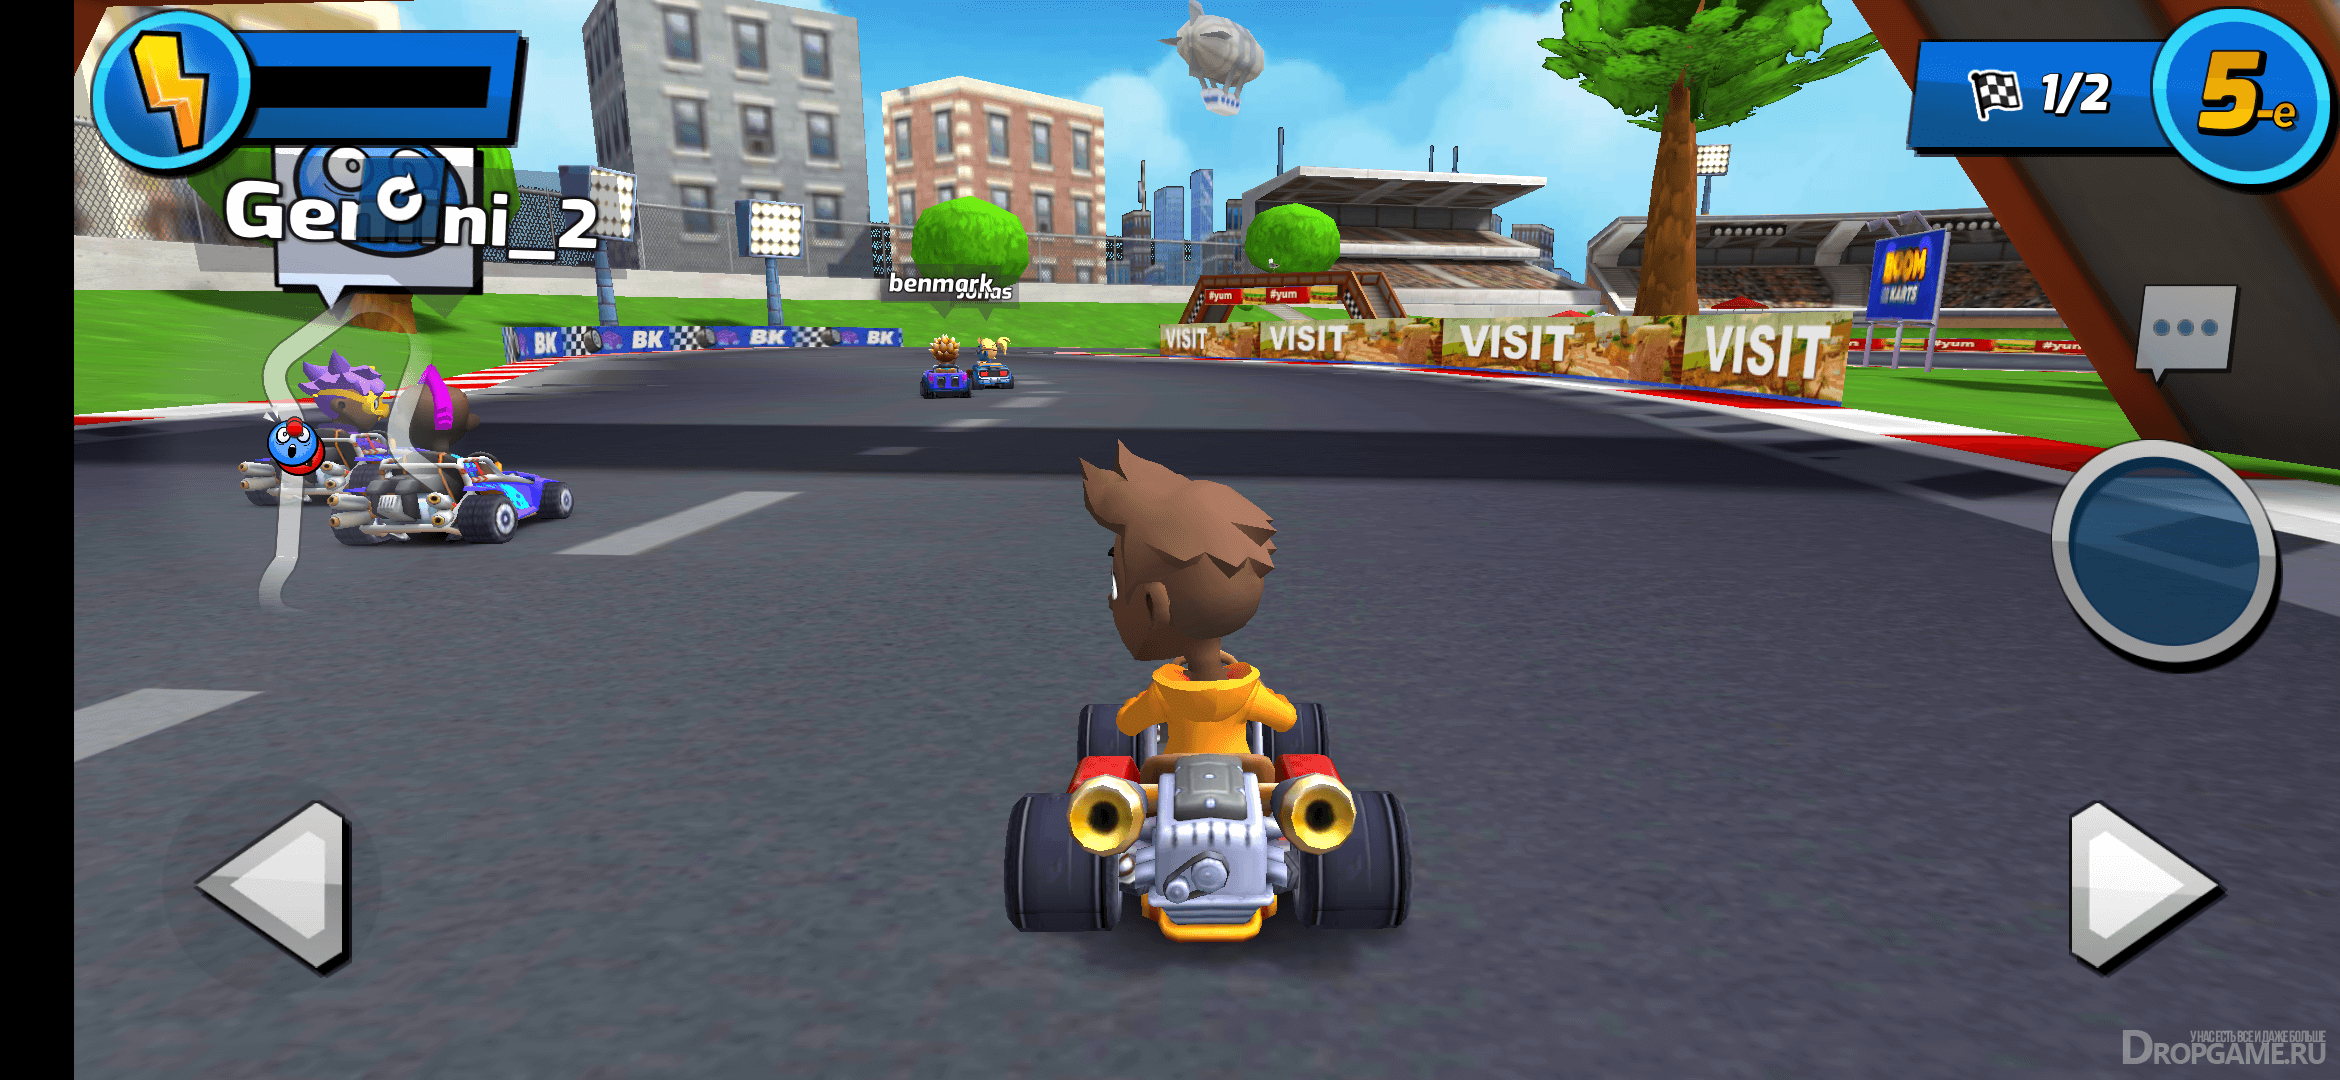 Boom Karts Multiplayer Racing (MOD, All Cars Unlocked/Speed) v1.33.1 APK  Download 